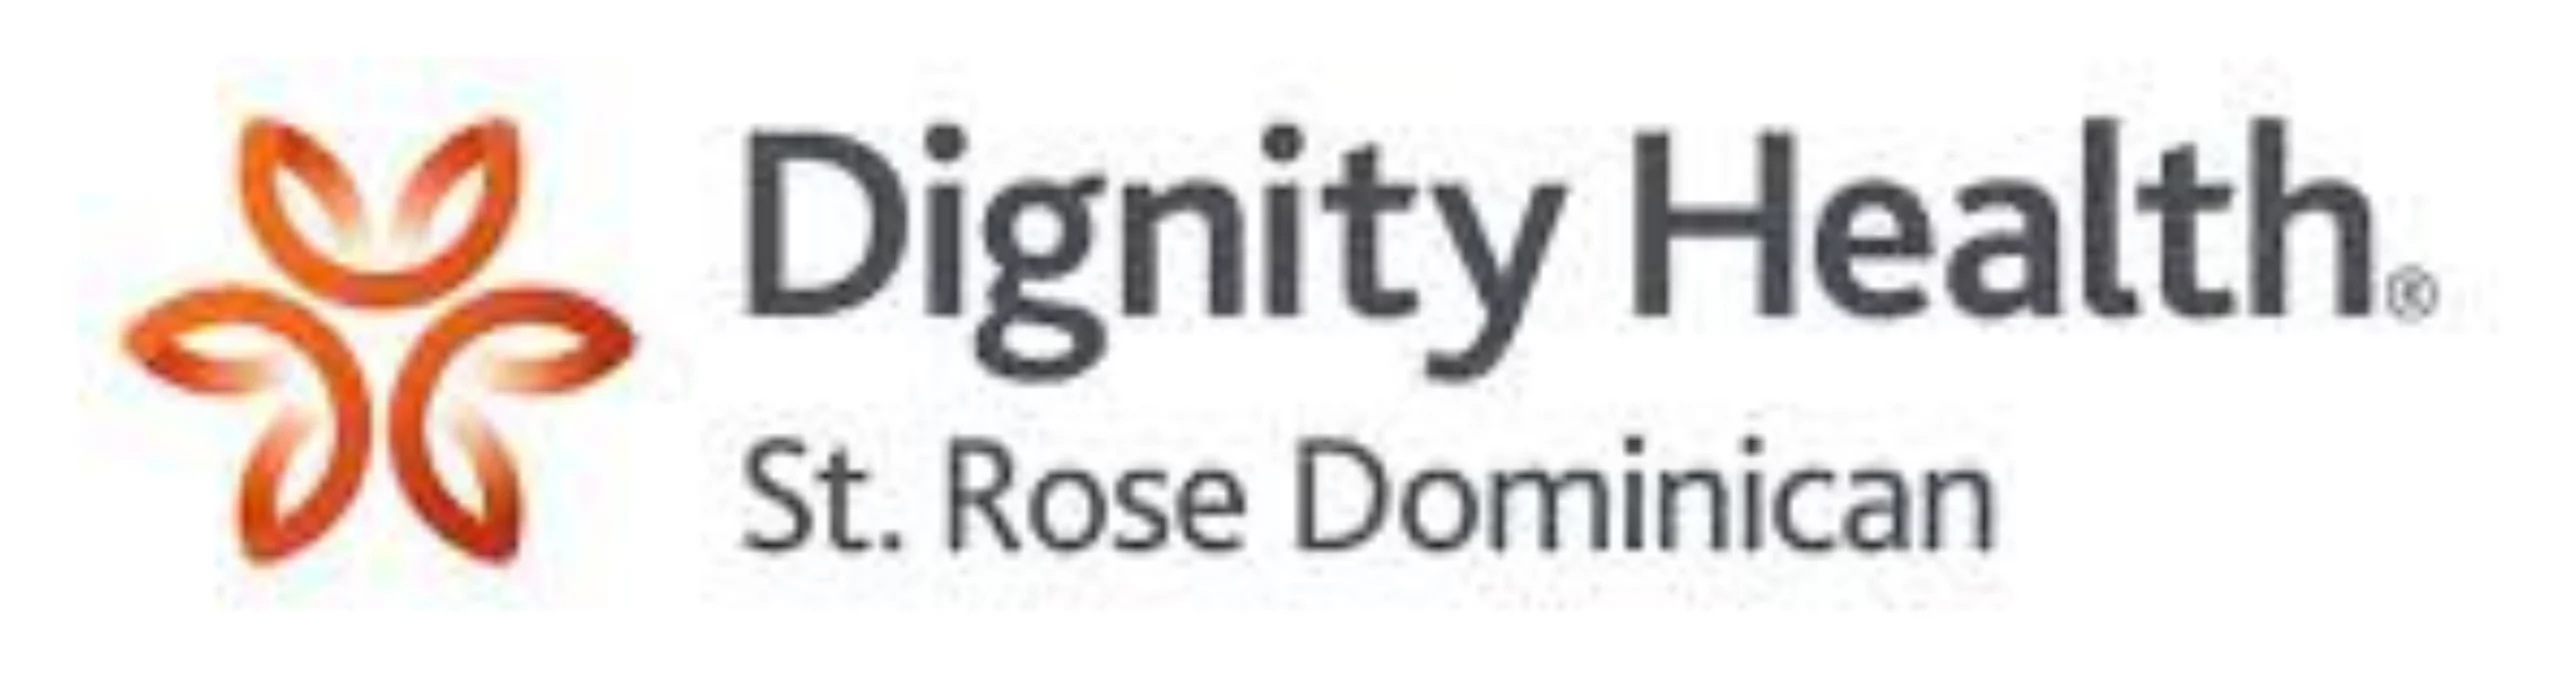 dignity-health-svg